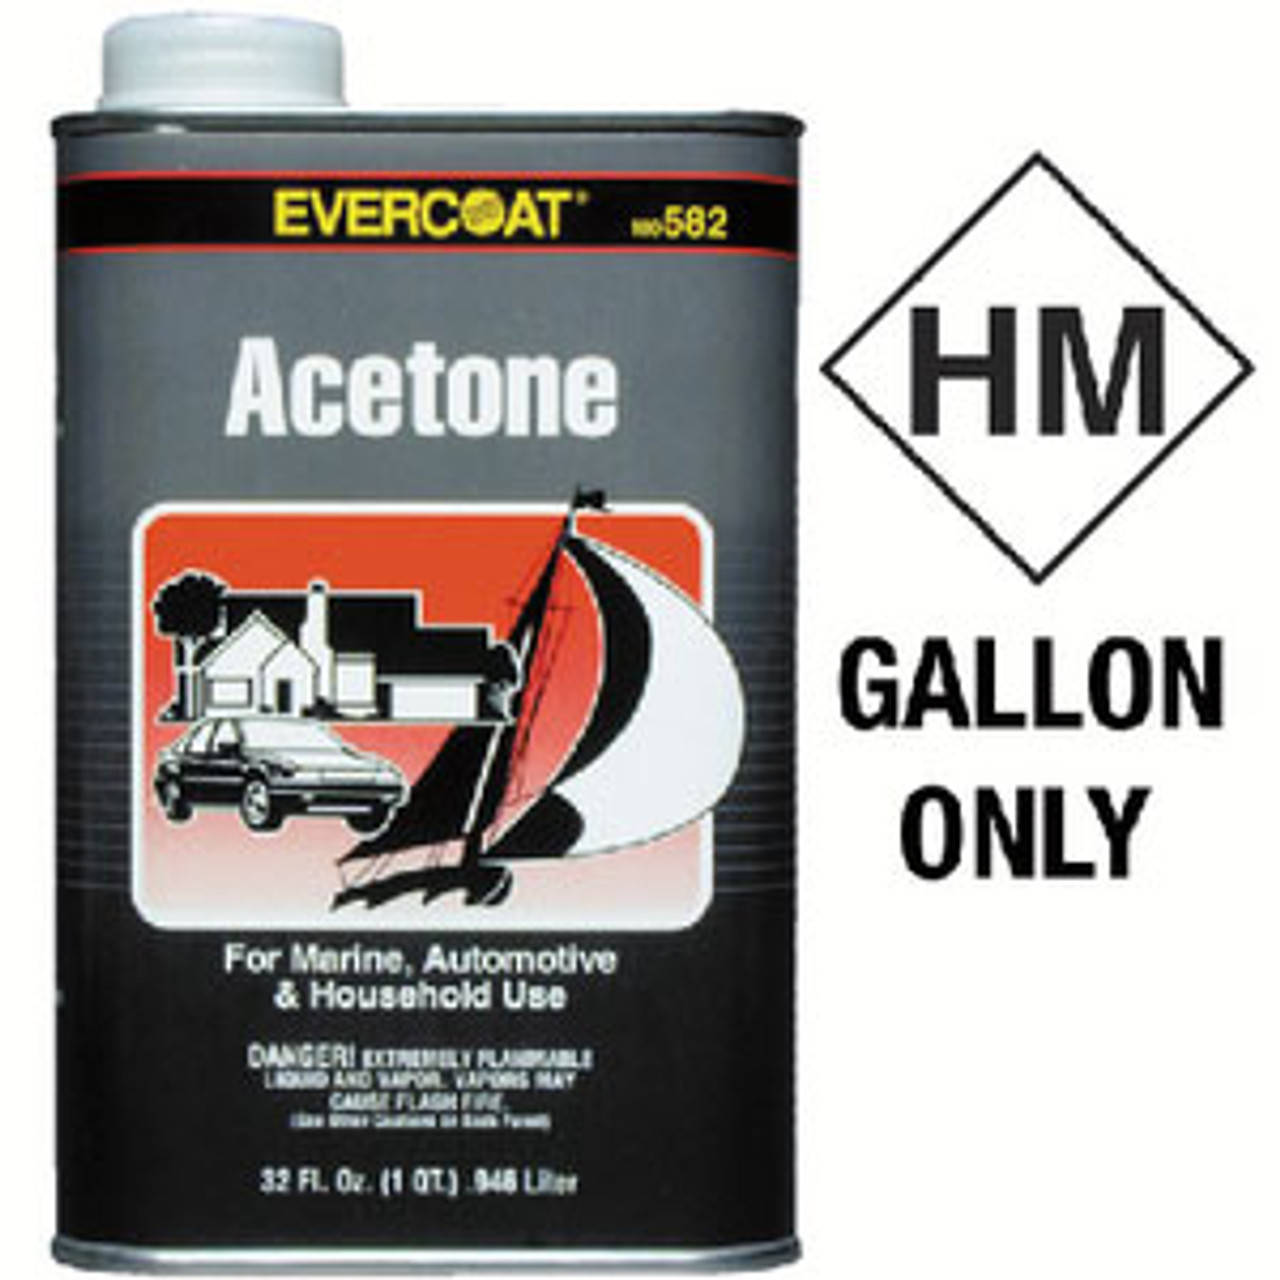 100581 - Acetone, Gallon - ITW Evercoat